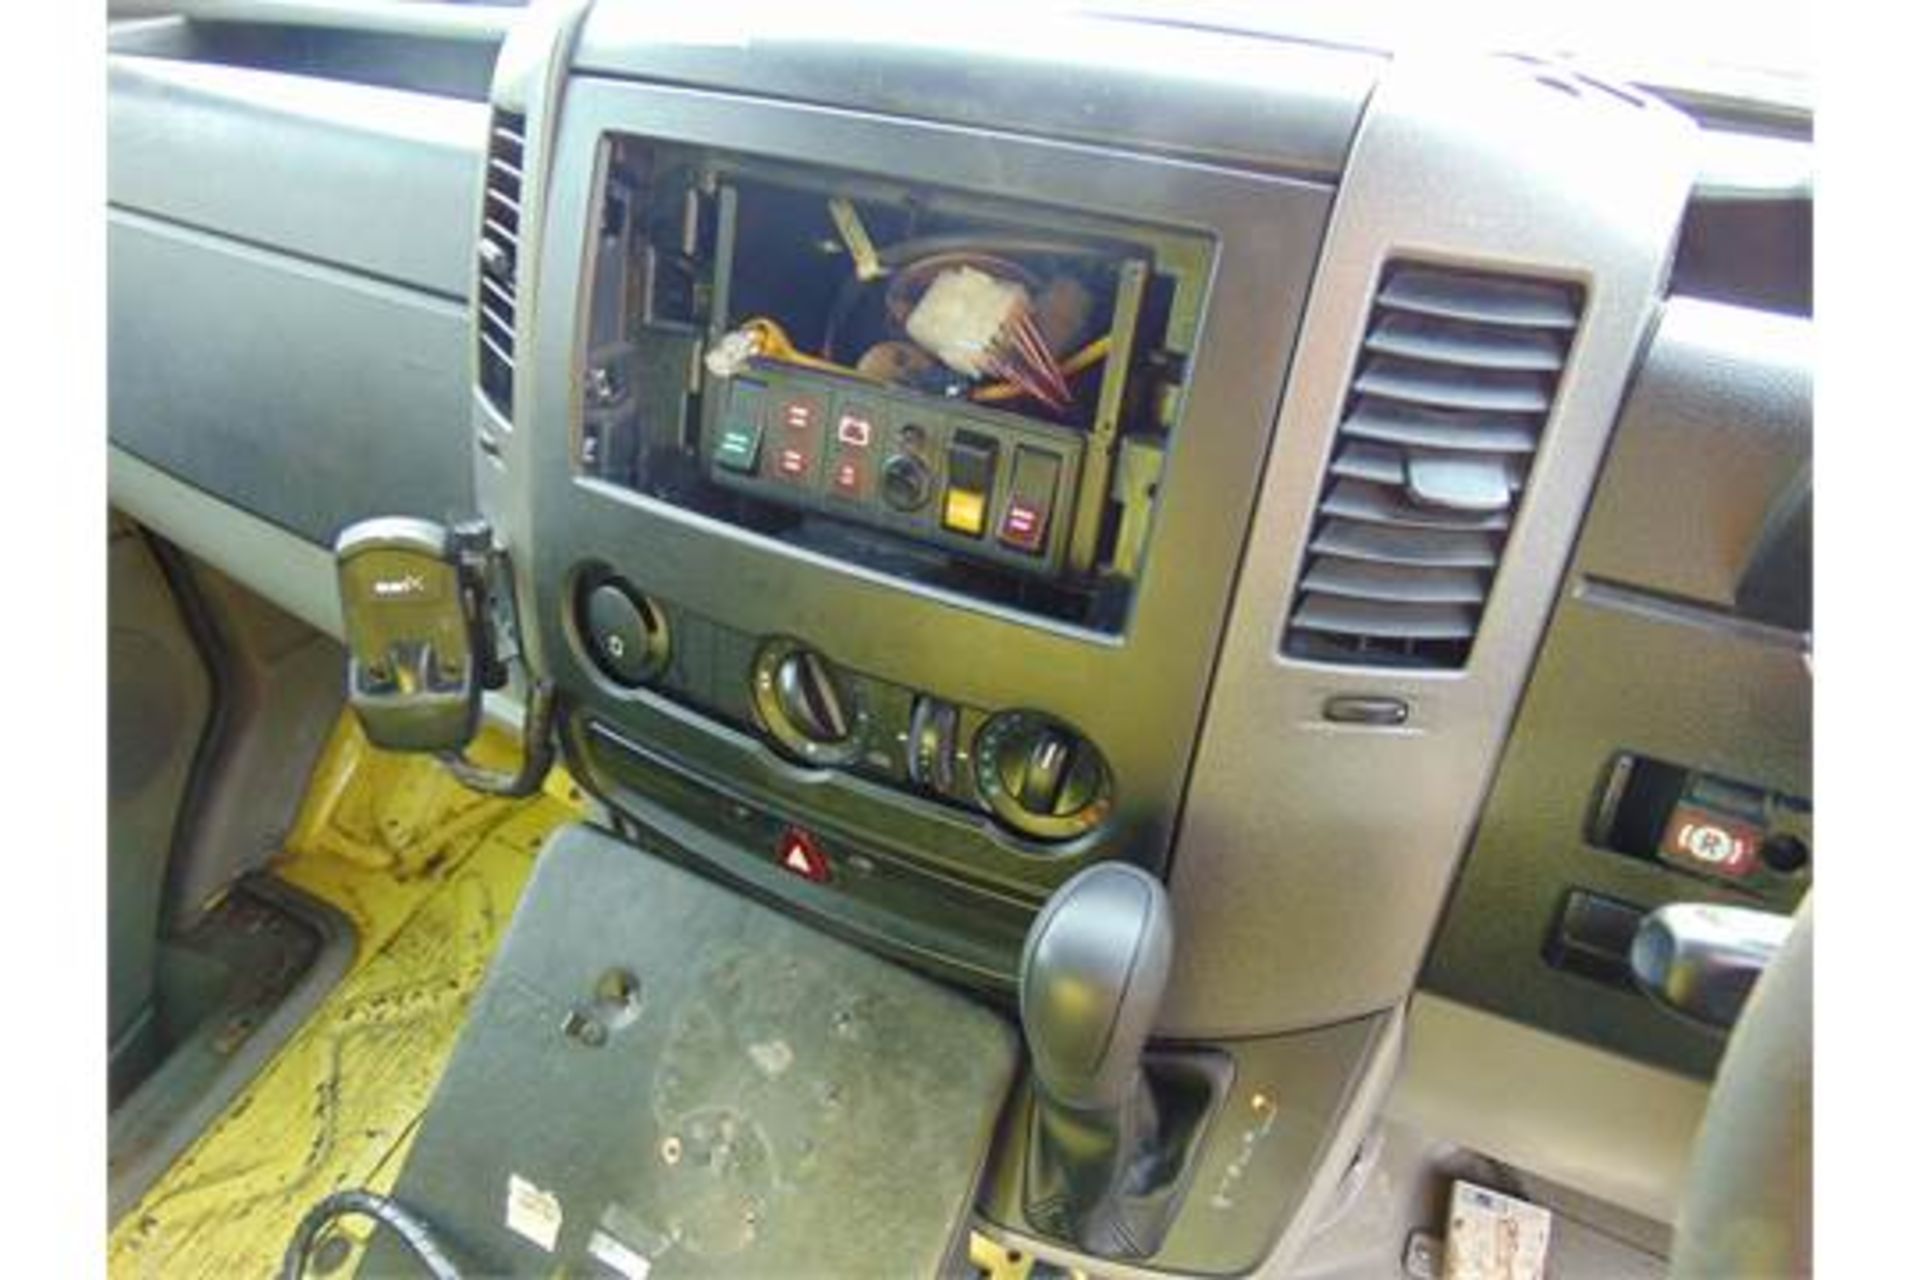 Mercedes Sprinter 515 CDI Turbo diesel ambulance - Image 10 of 21